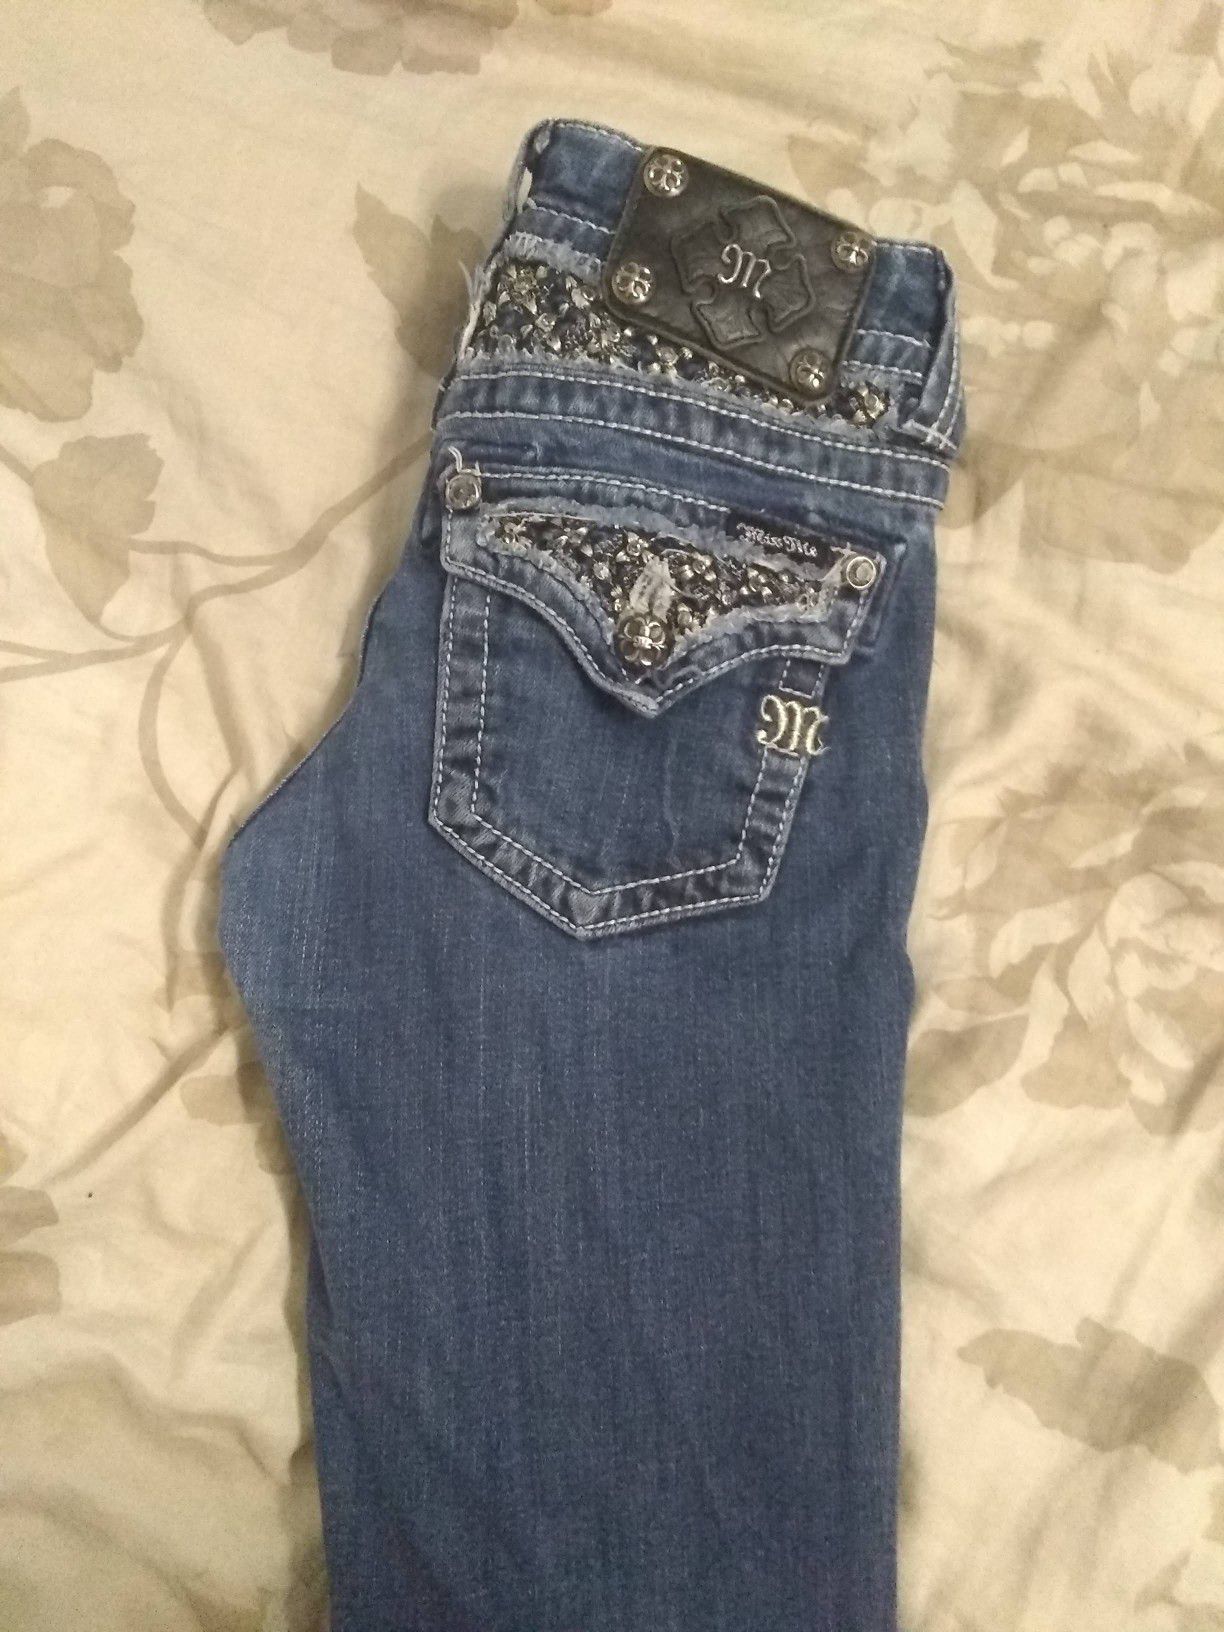 Miss me jeans size 16